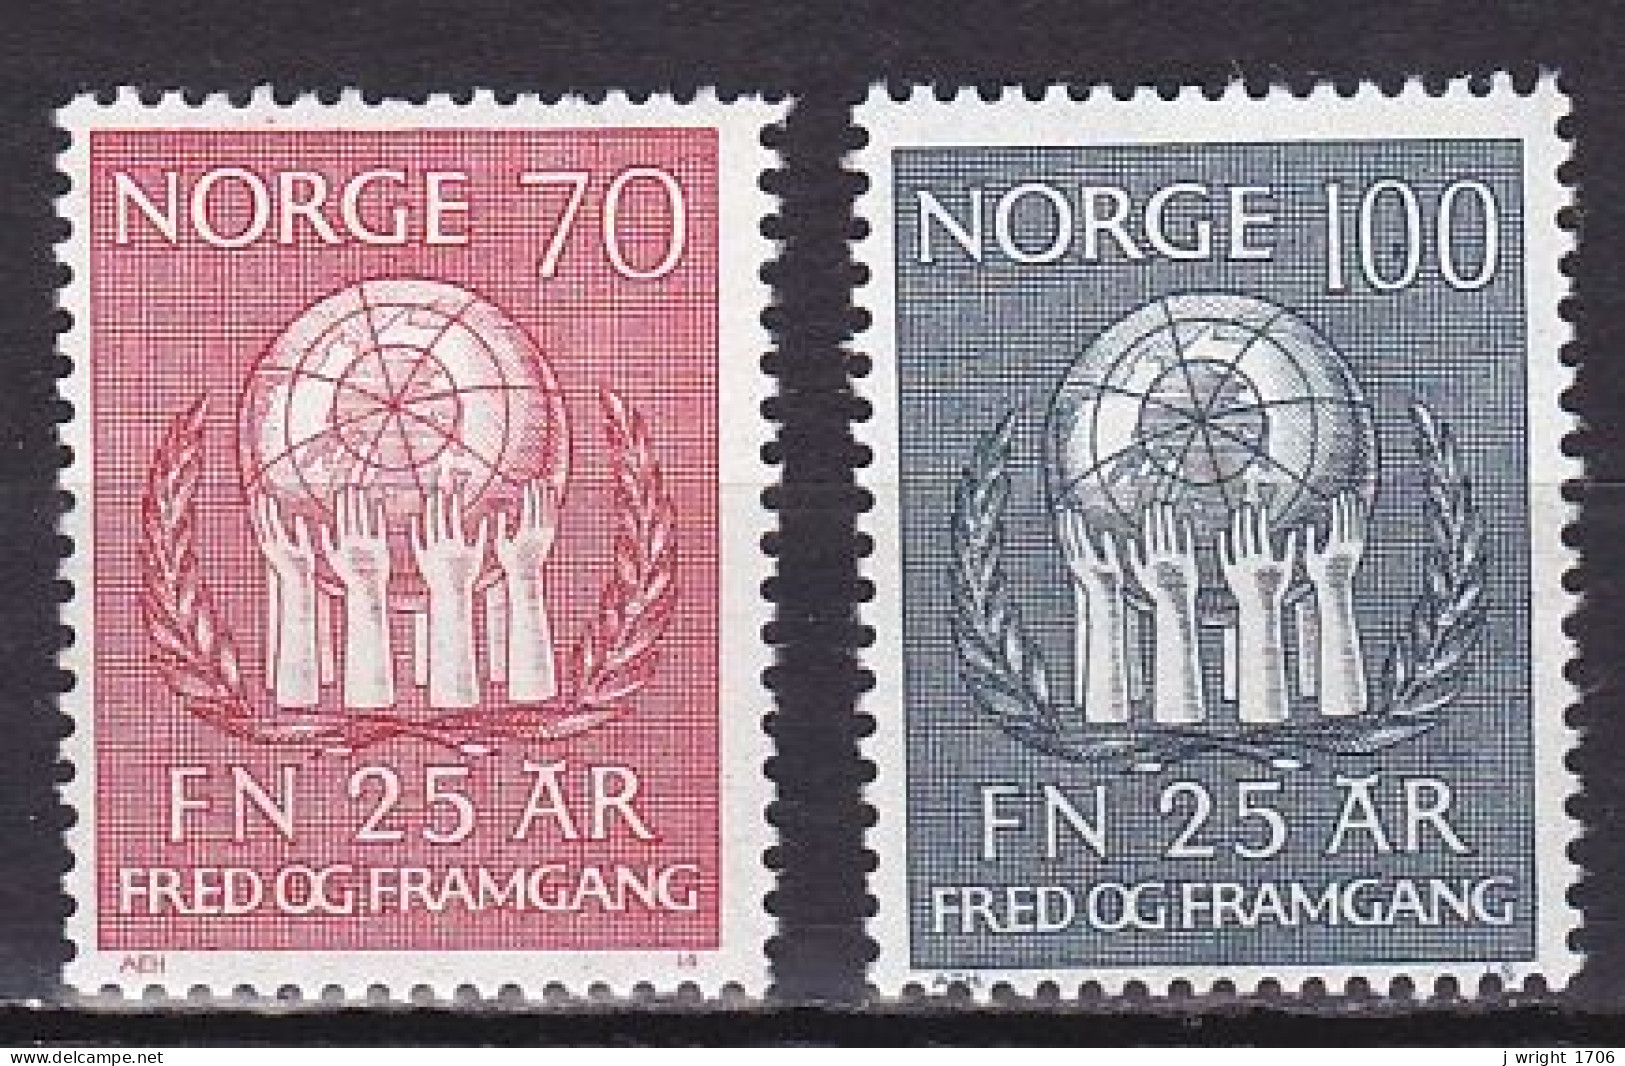 Norway, 1970, United Nations UN 25th Anniv, Set, MNH - Nuevos